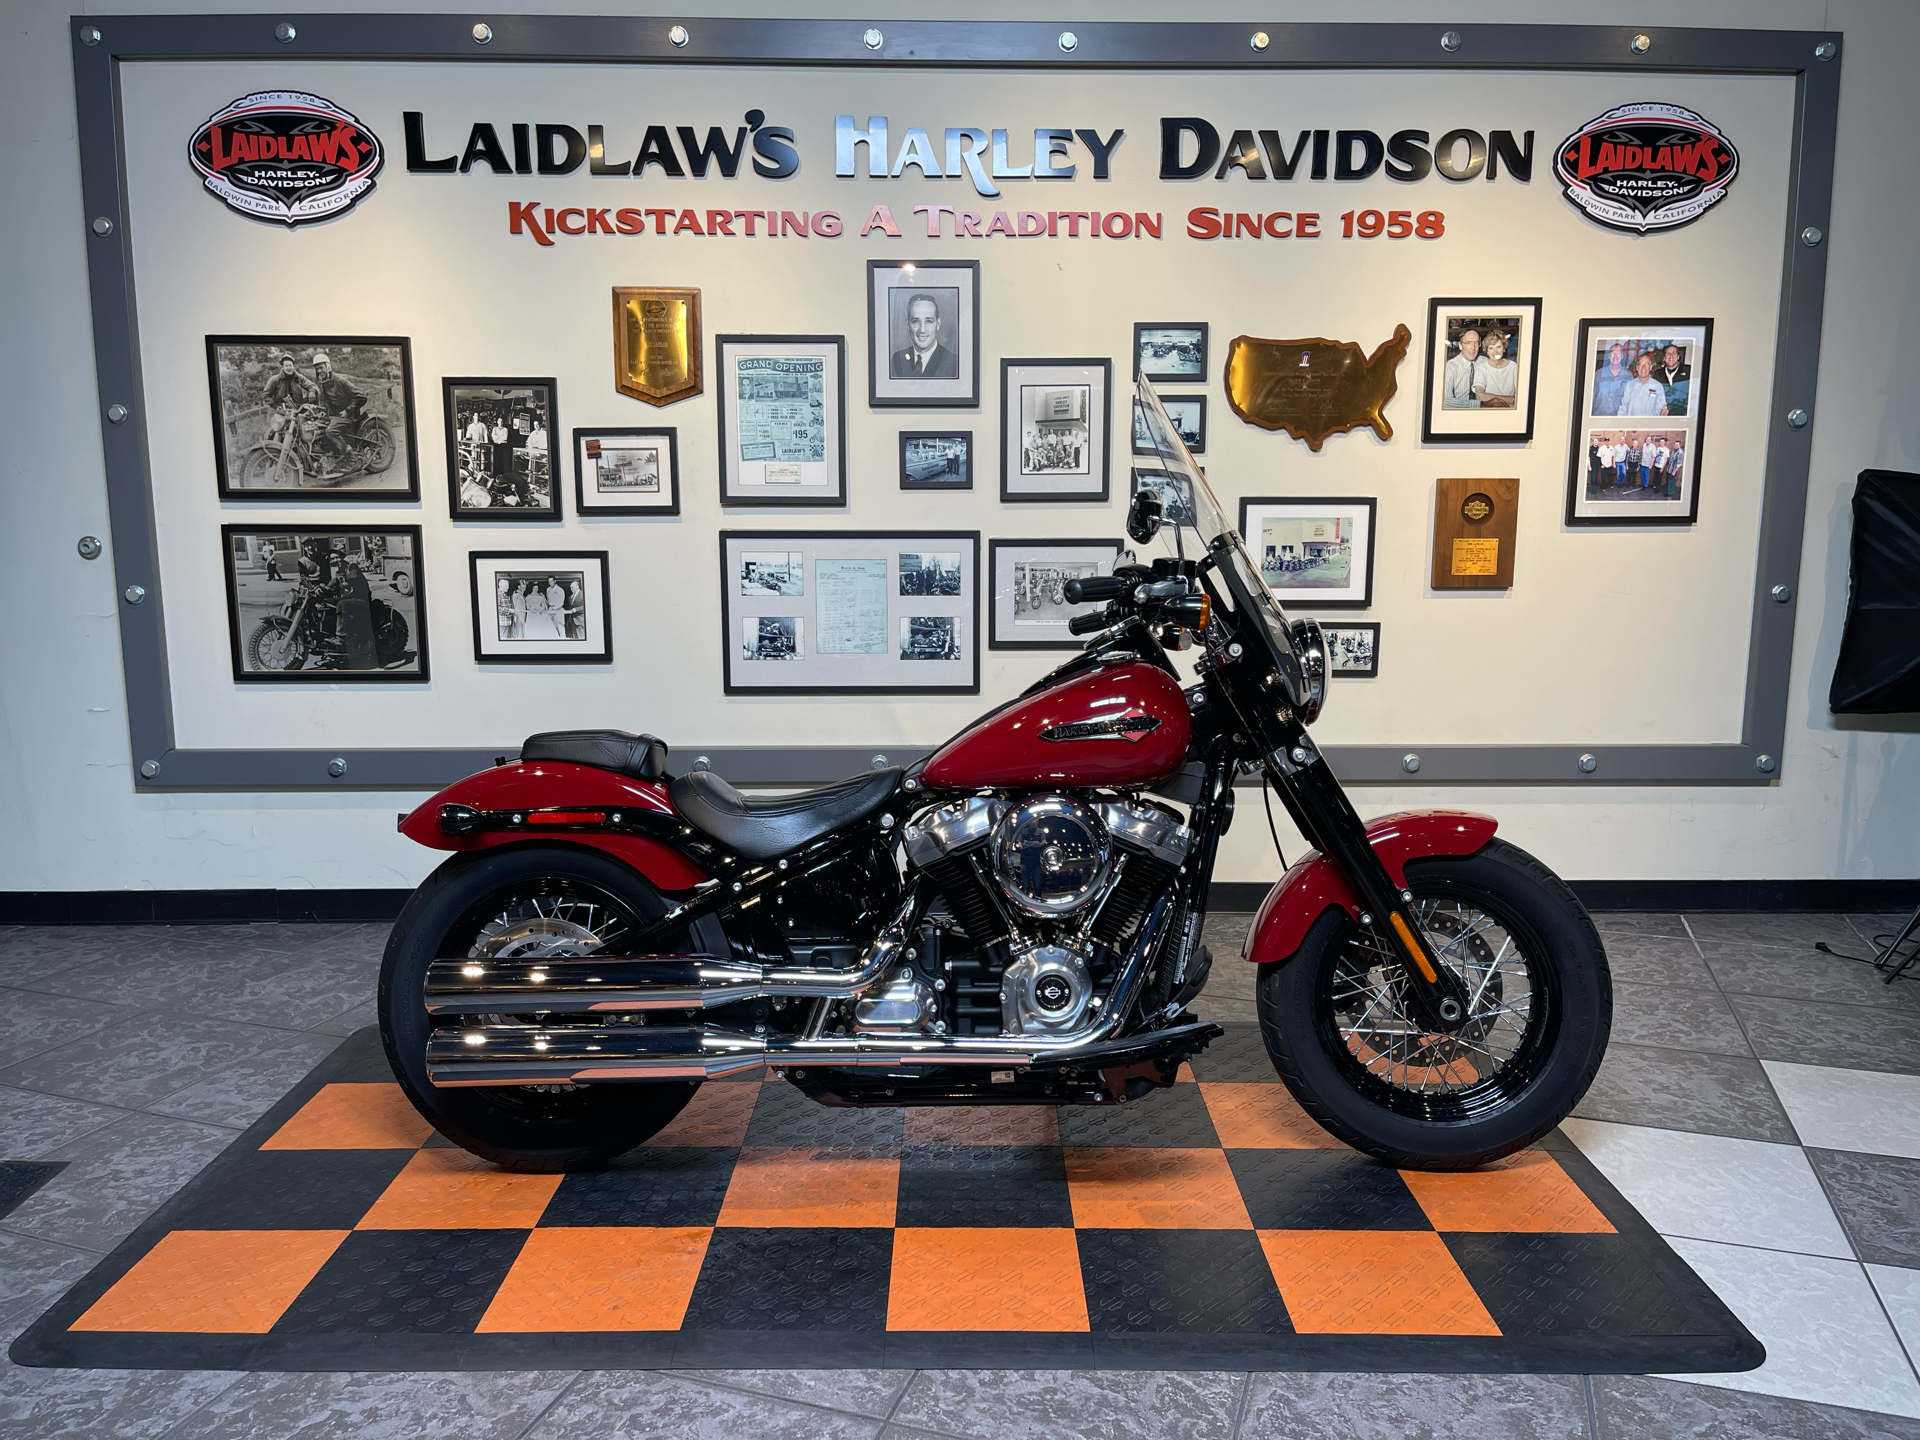 2021 Harley-Davidson Softail Slim® in Baldwin Park, California - Photo 1